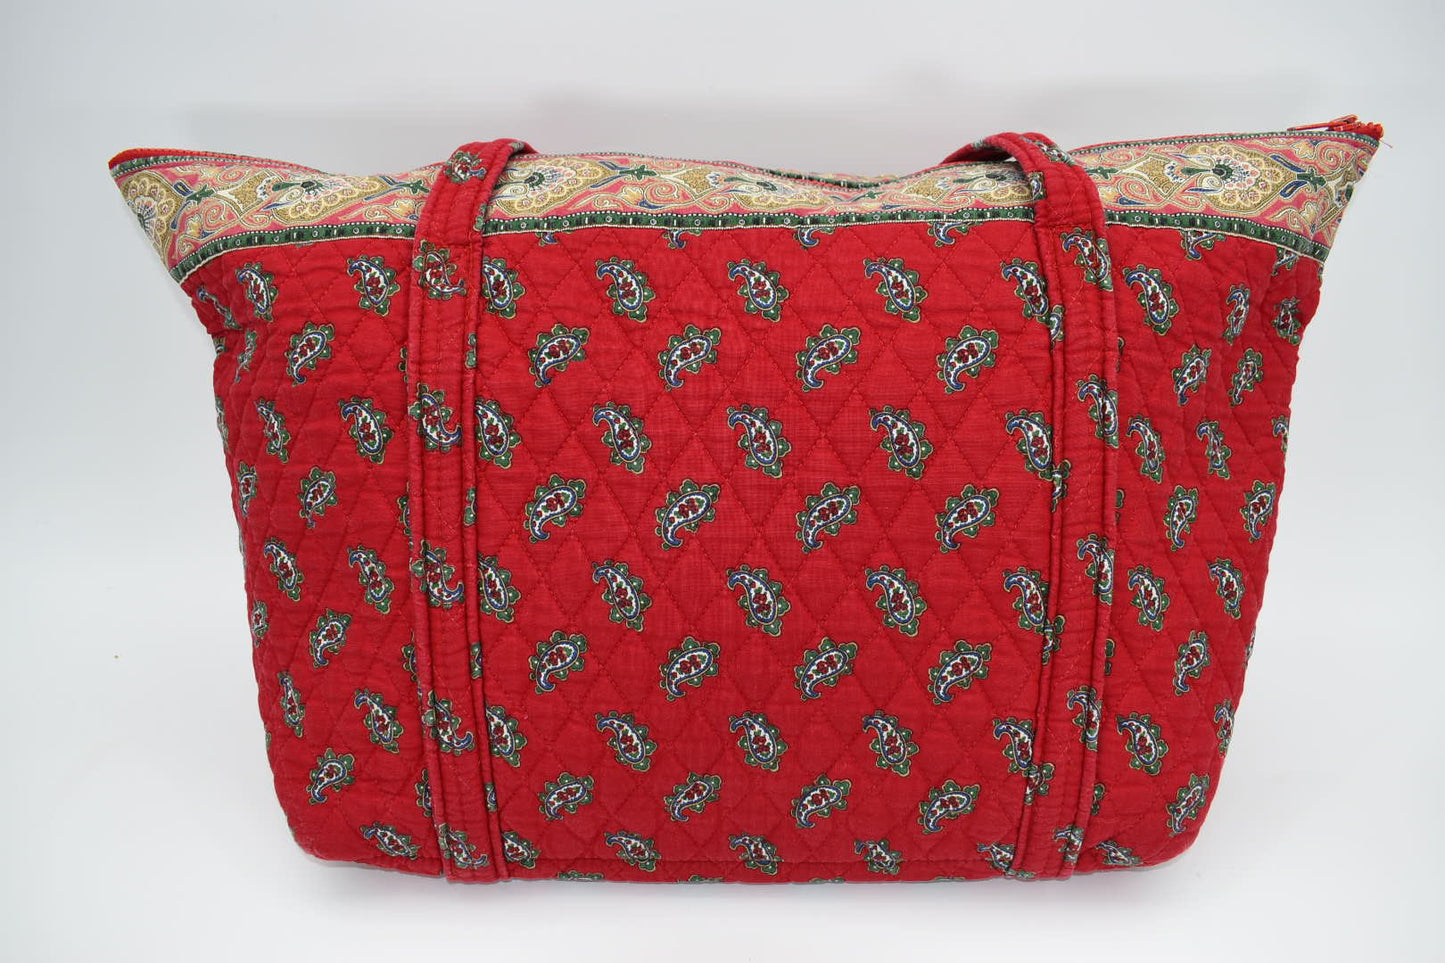 Vintage Vera Bradley Miller Travel Tote Bag in "Red - 1991" Pattern